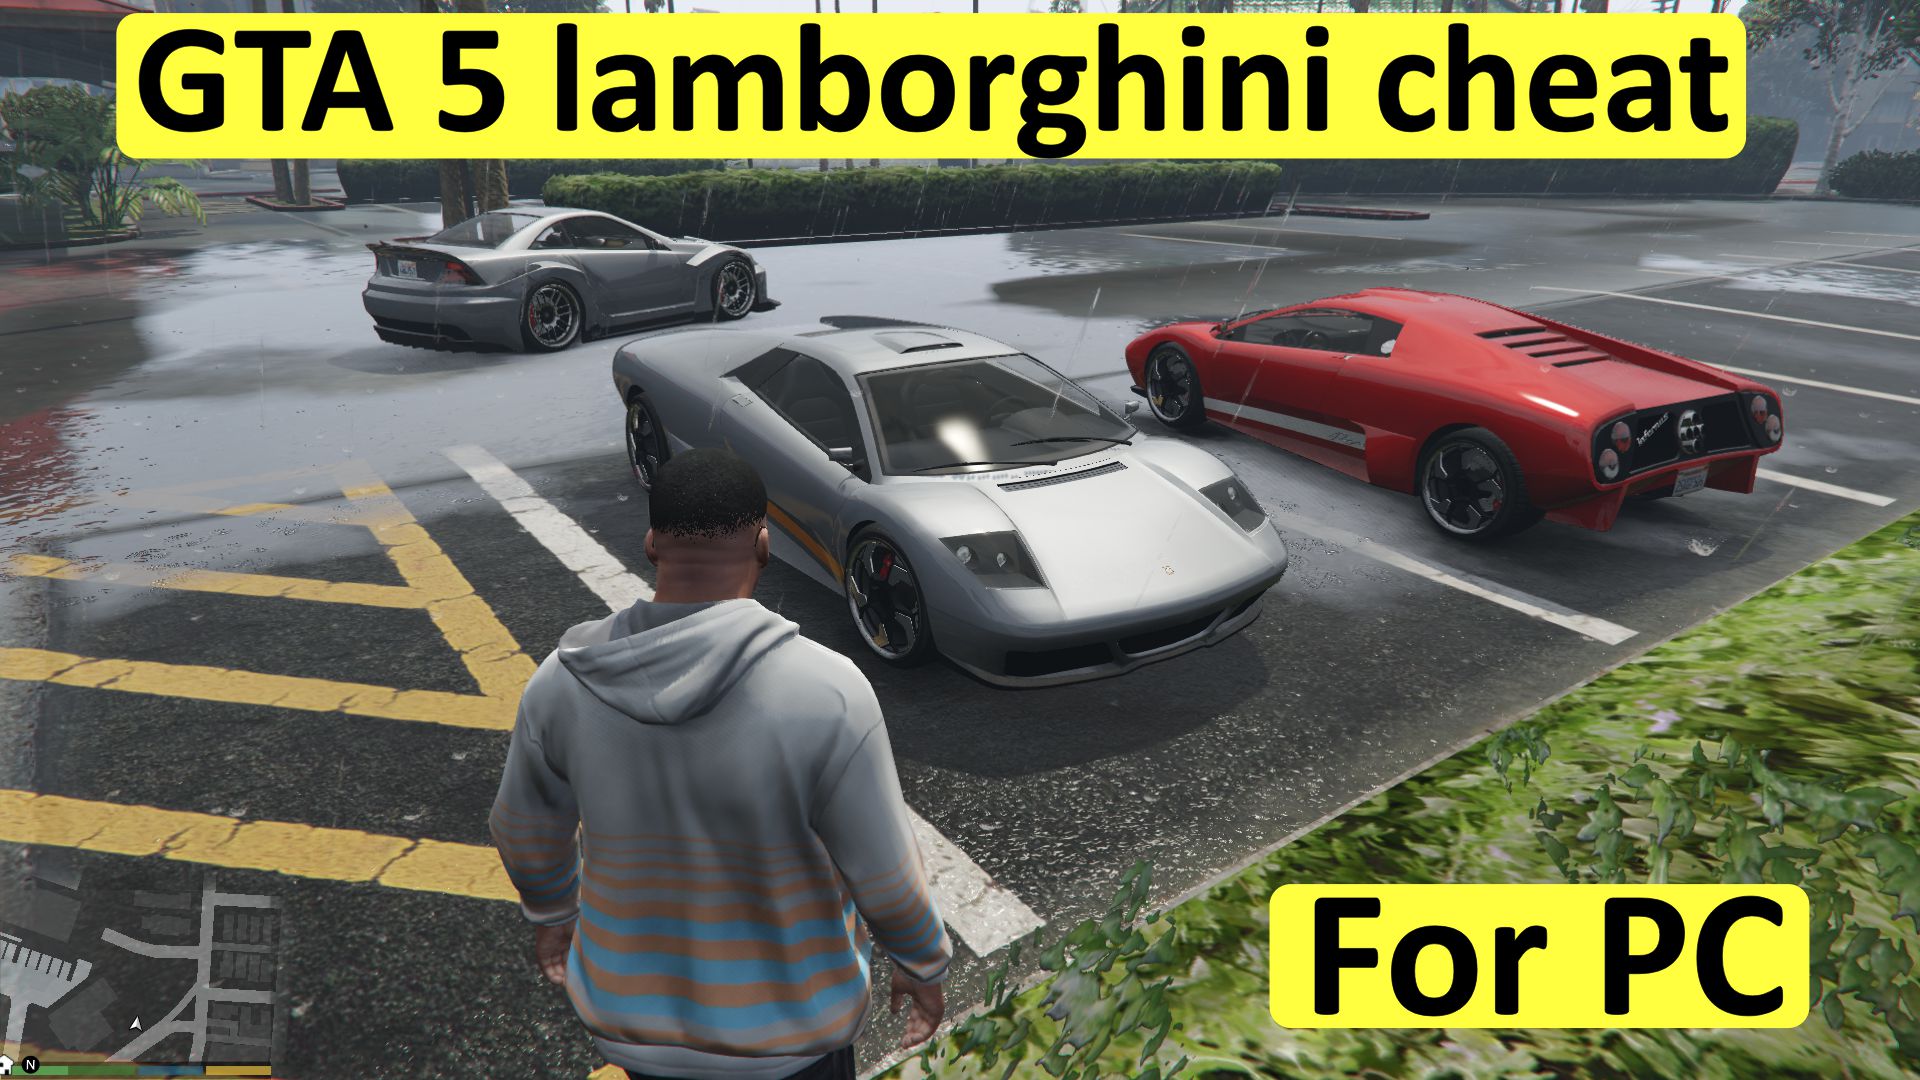 GTA 5 Lamborghini cheat for PC